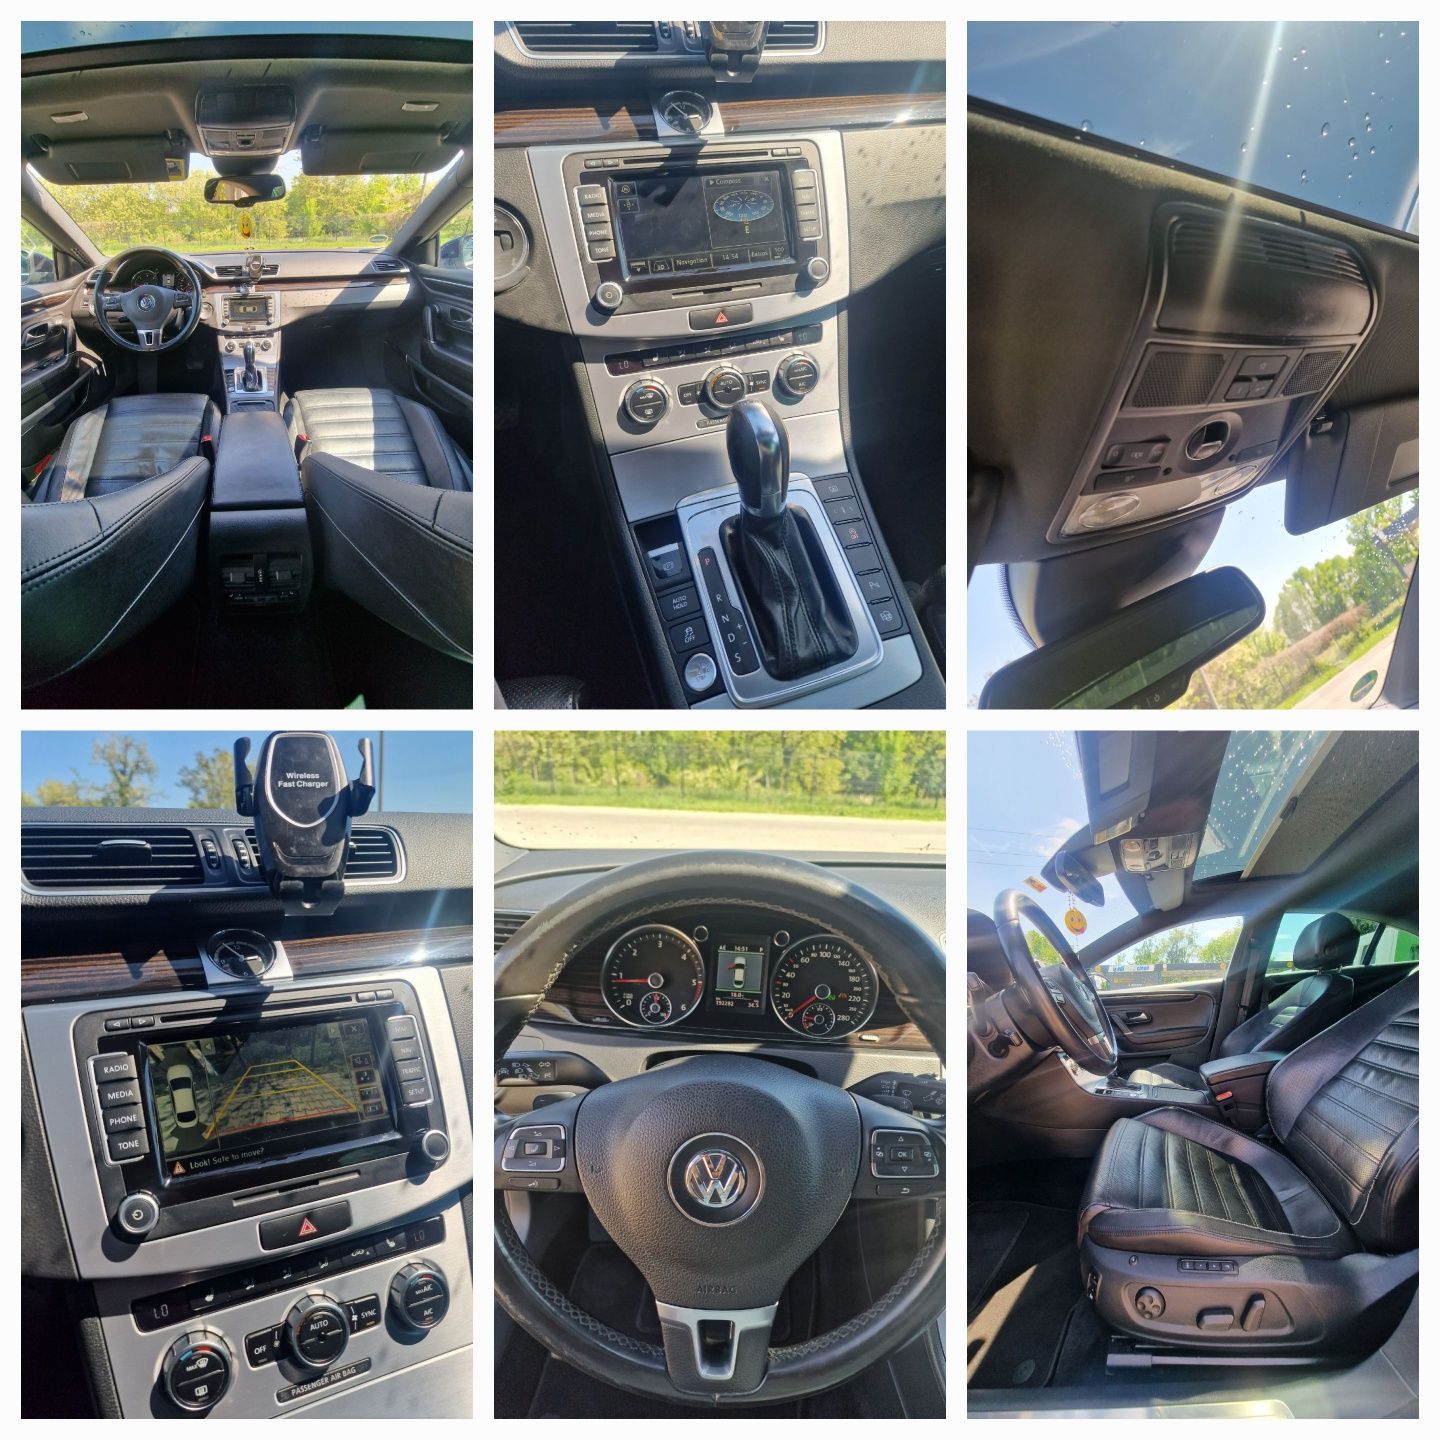 VW Passat CC 2.0 Tdi 177 Cp DSG Full Options